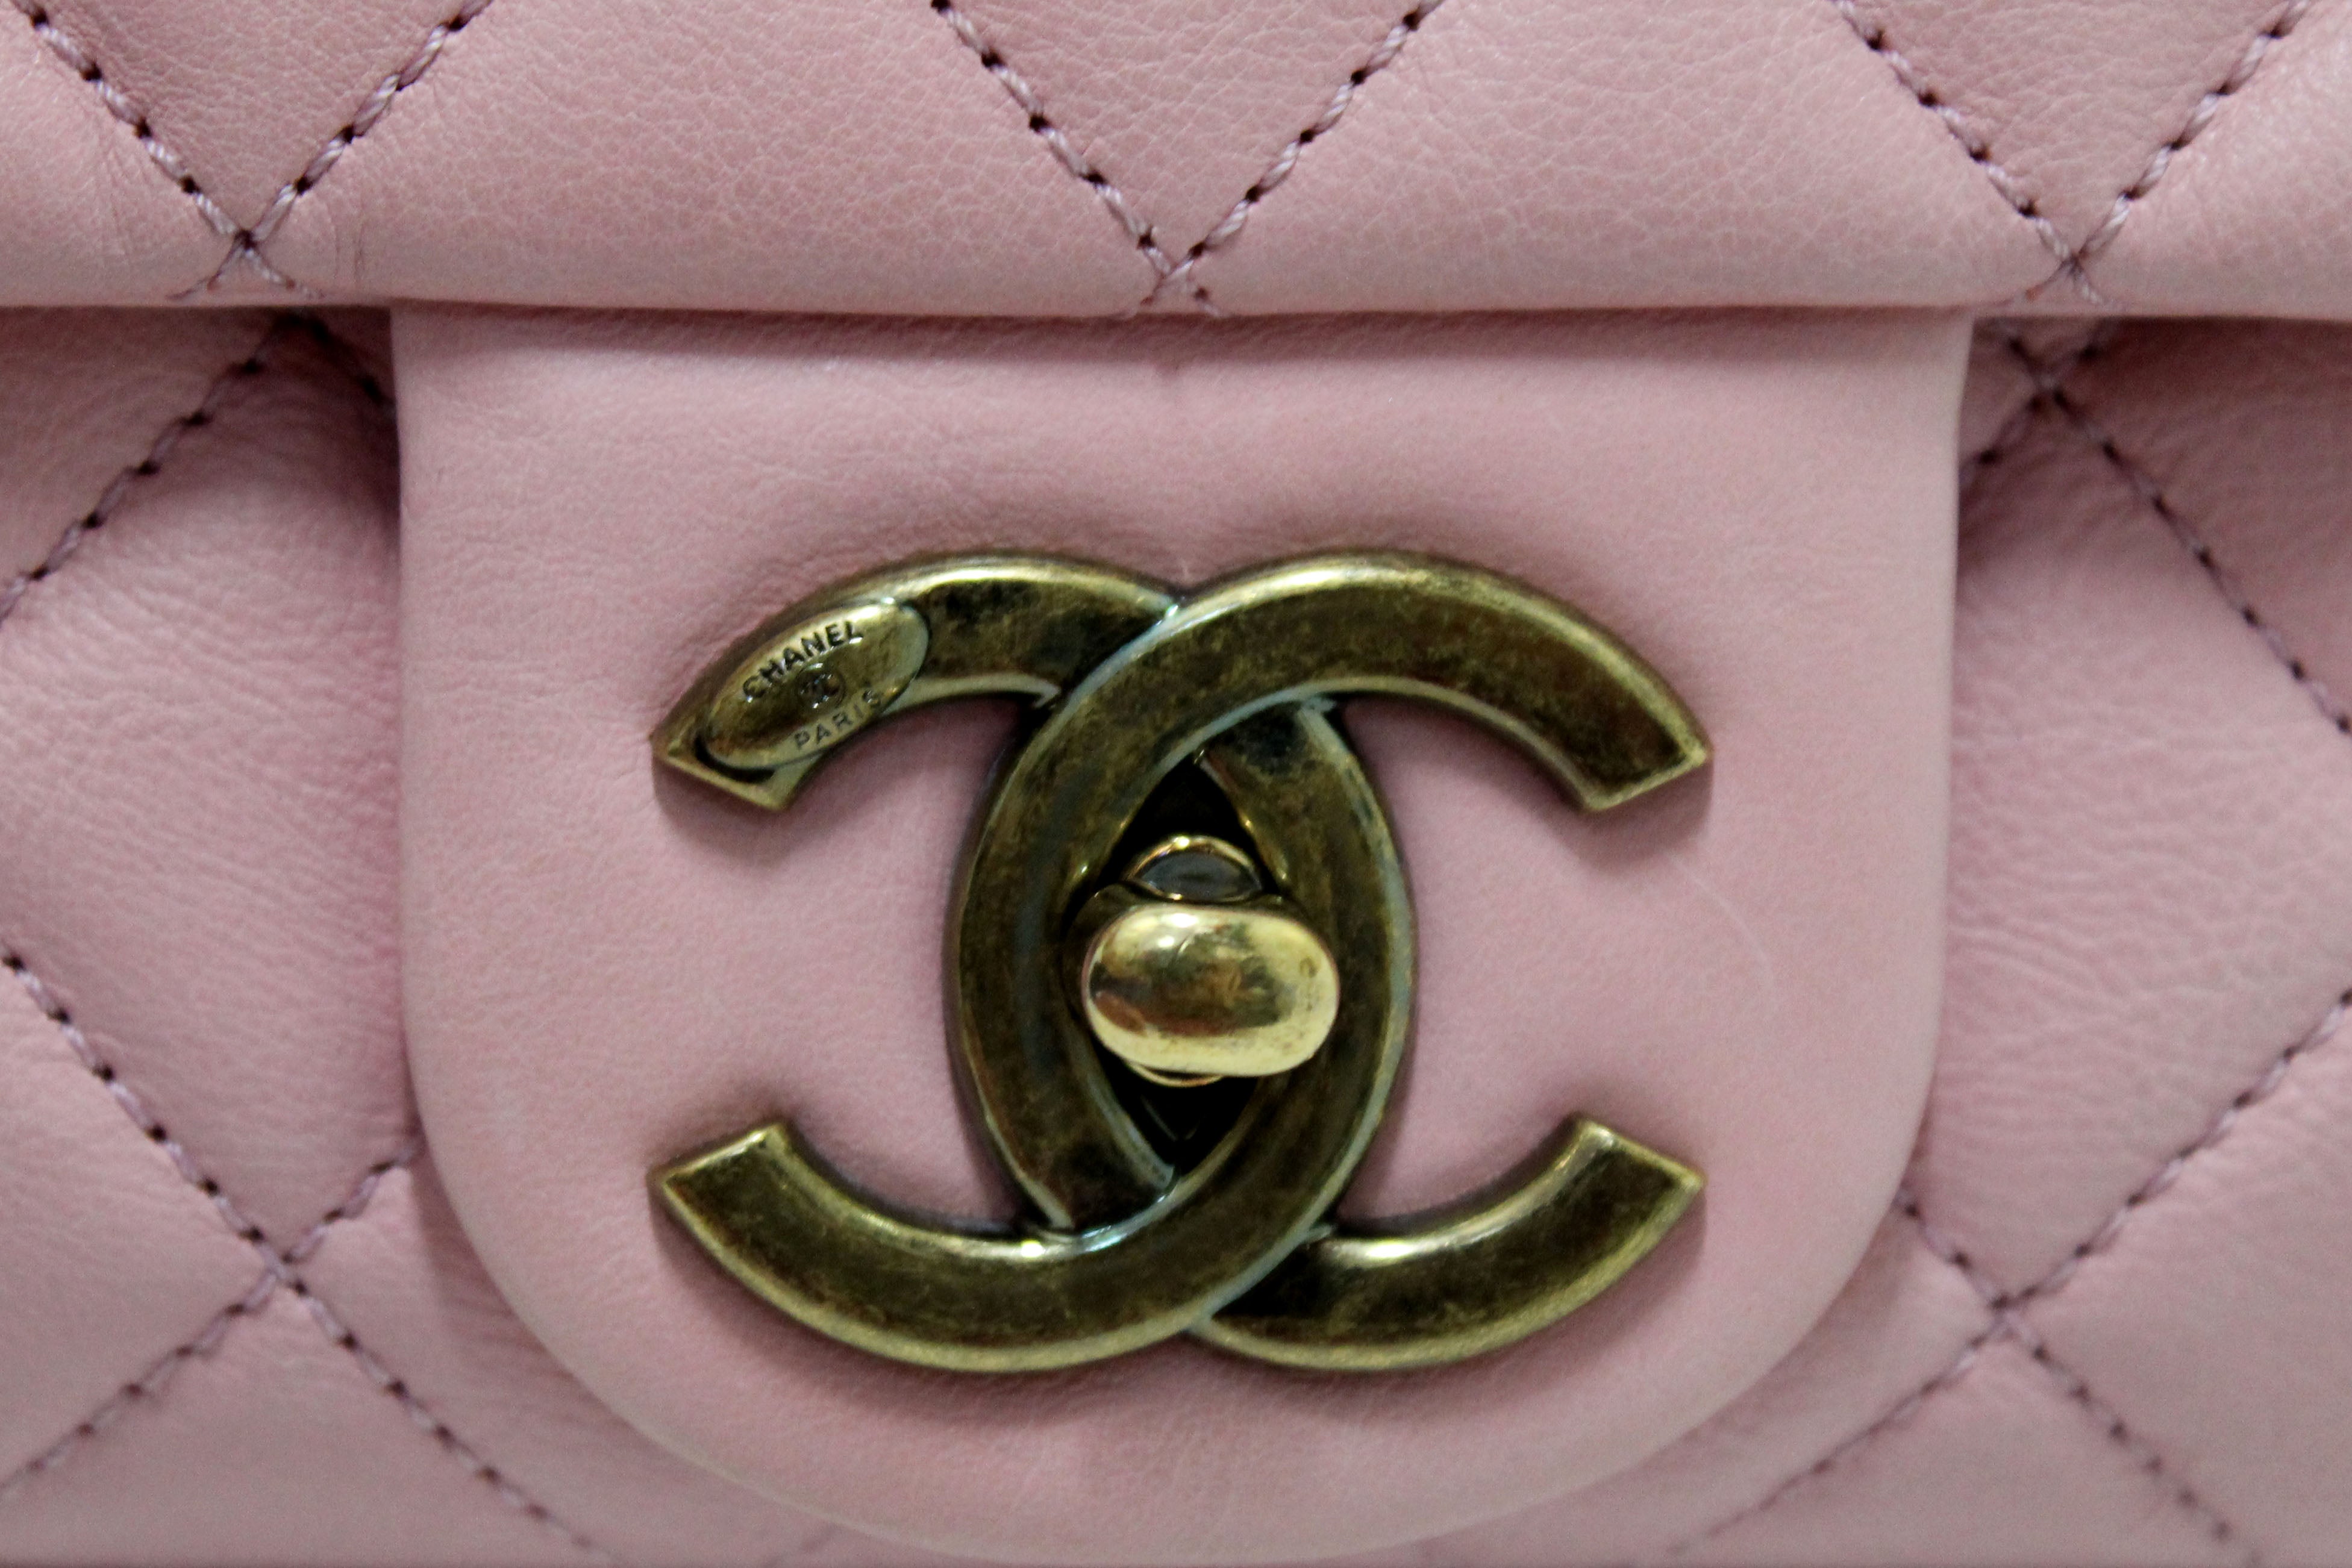 Authentic Chanel Pink Calfskin Leather Zipped Back Pocket Calfskin Flap Bag